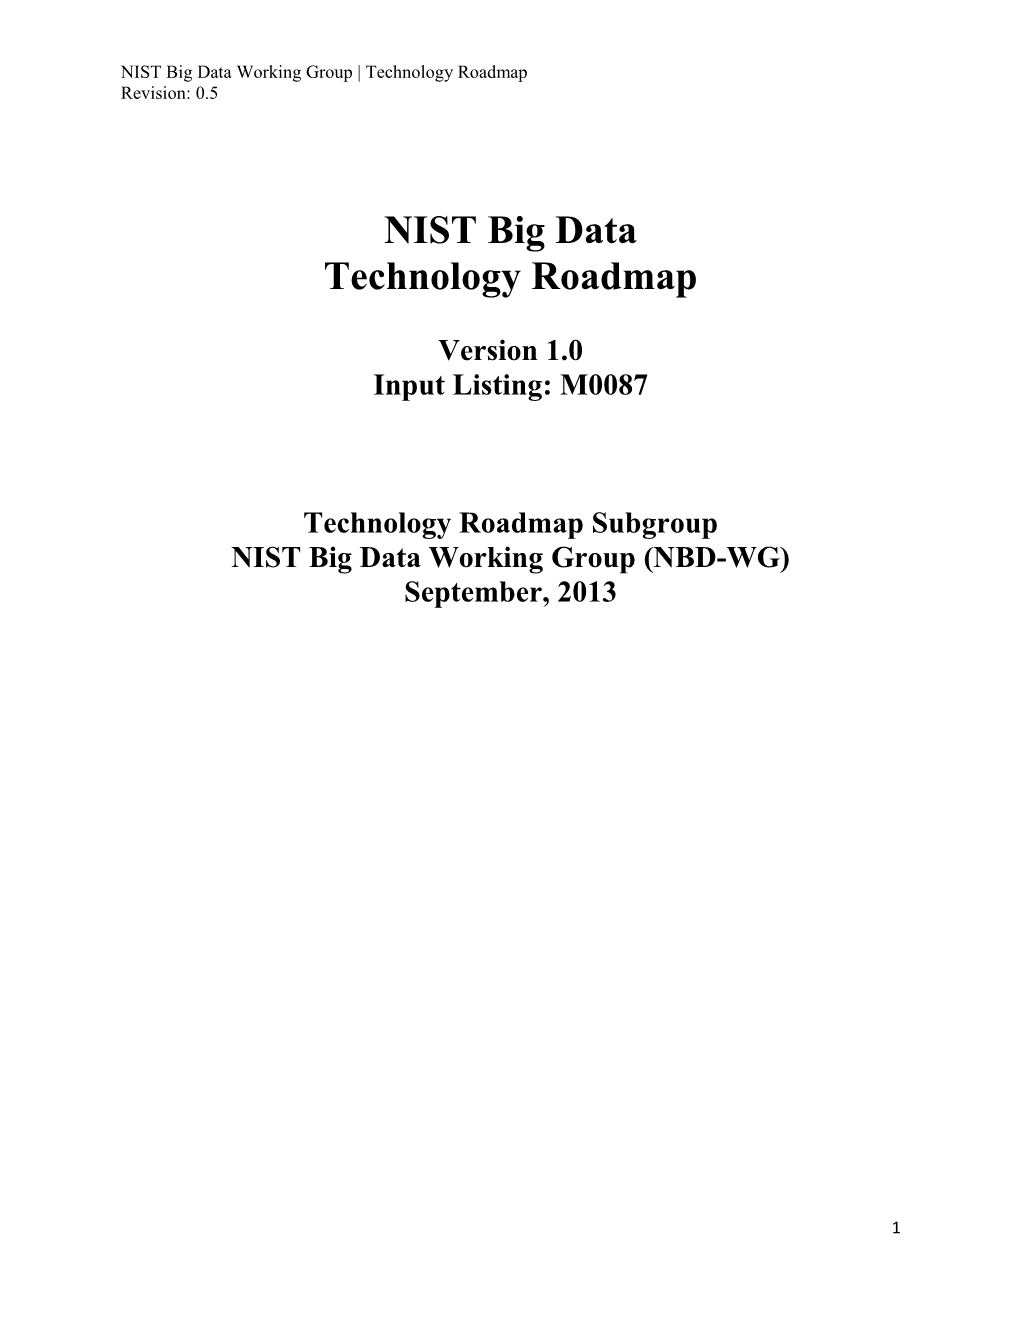 NIST Big Data Working Group Technology Roadmap